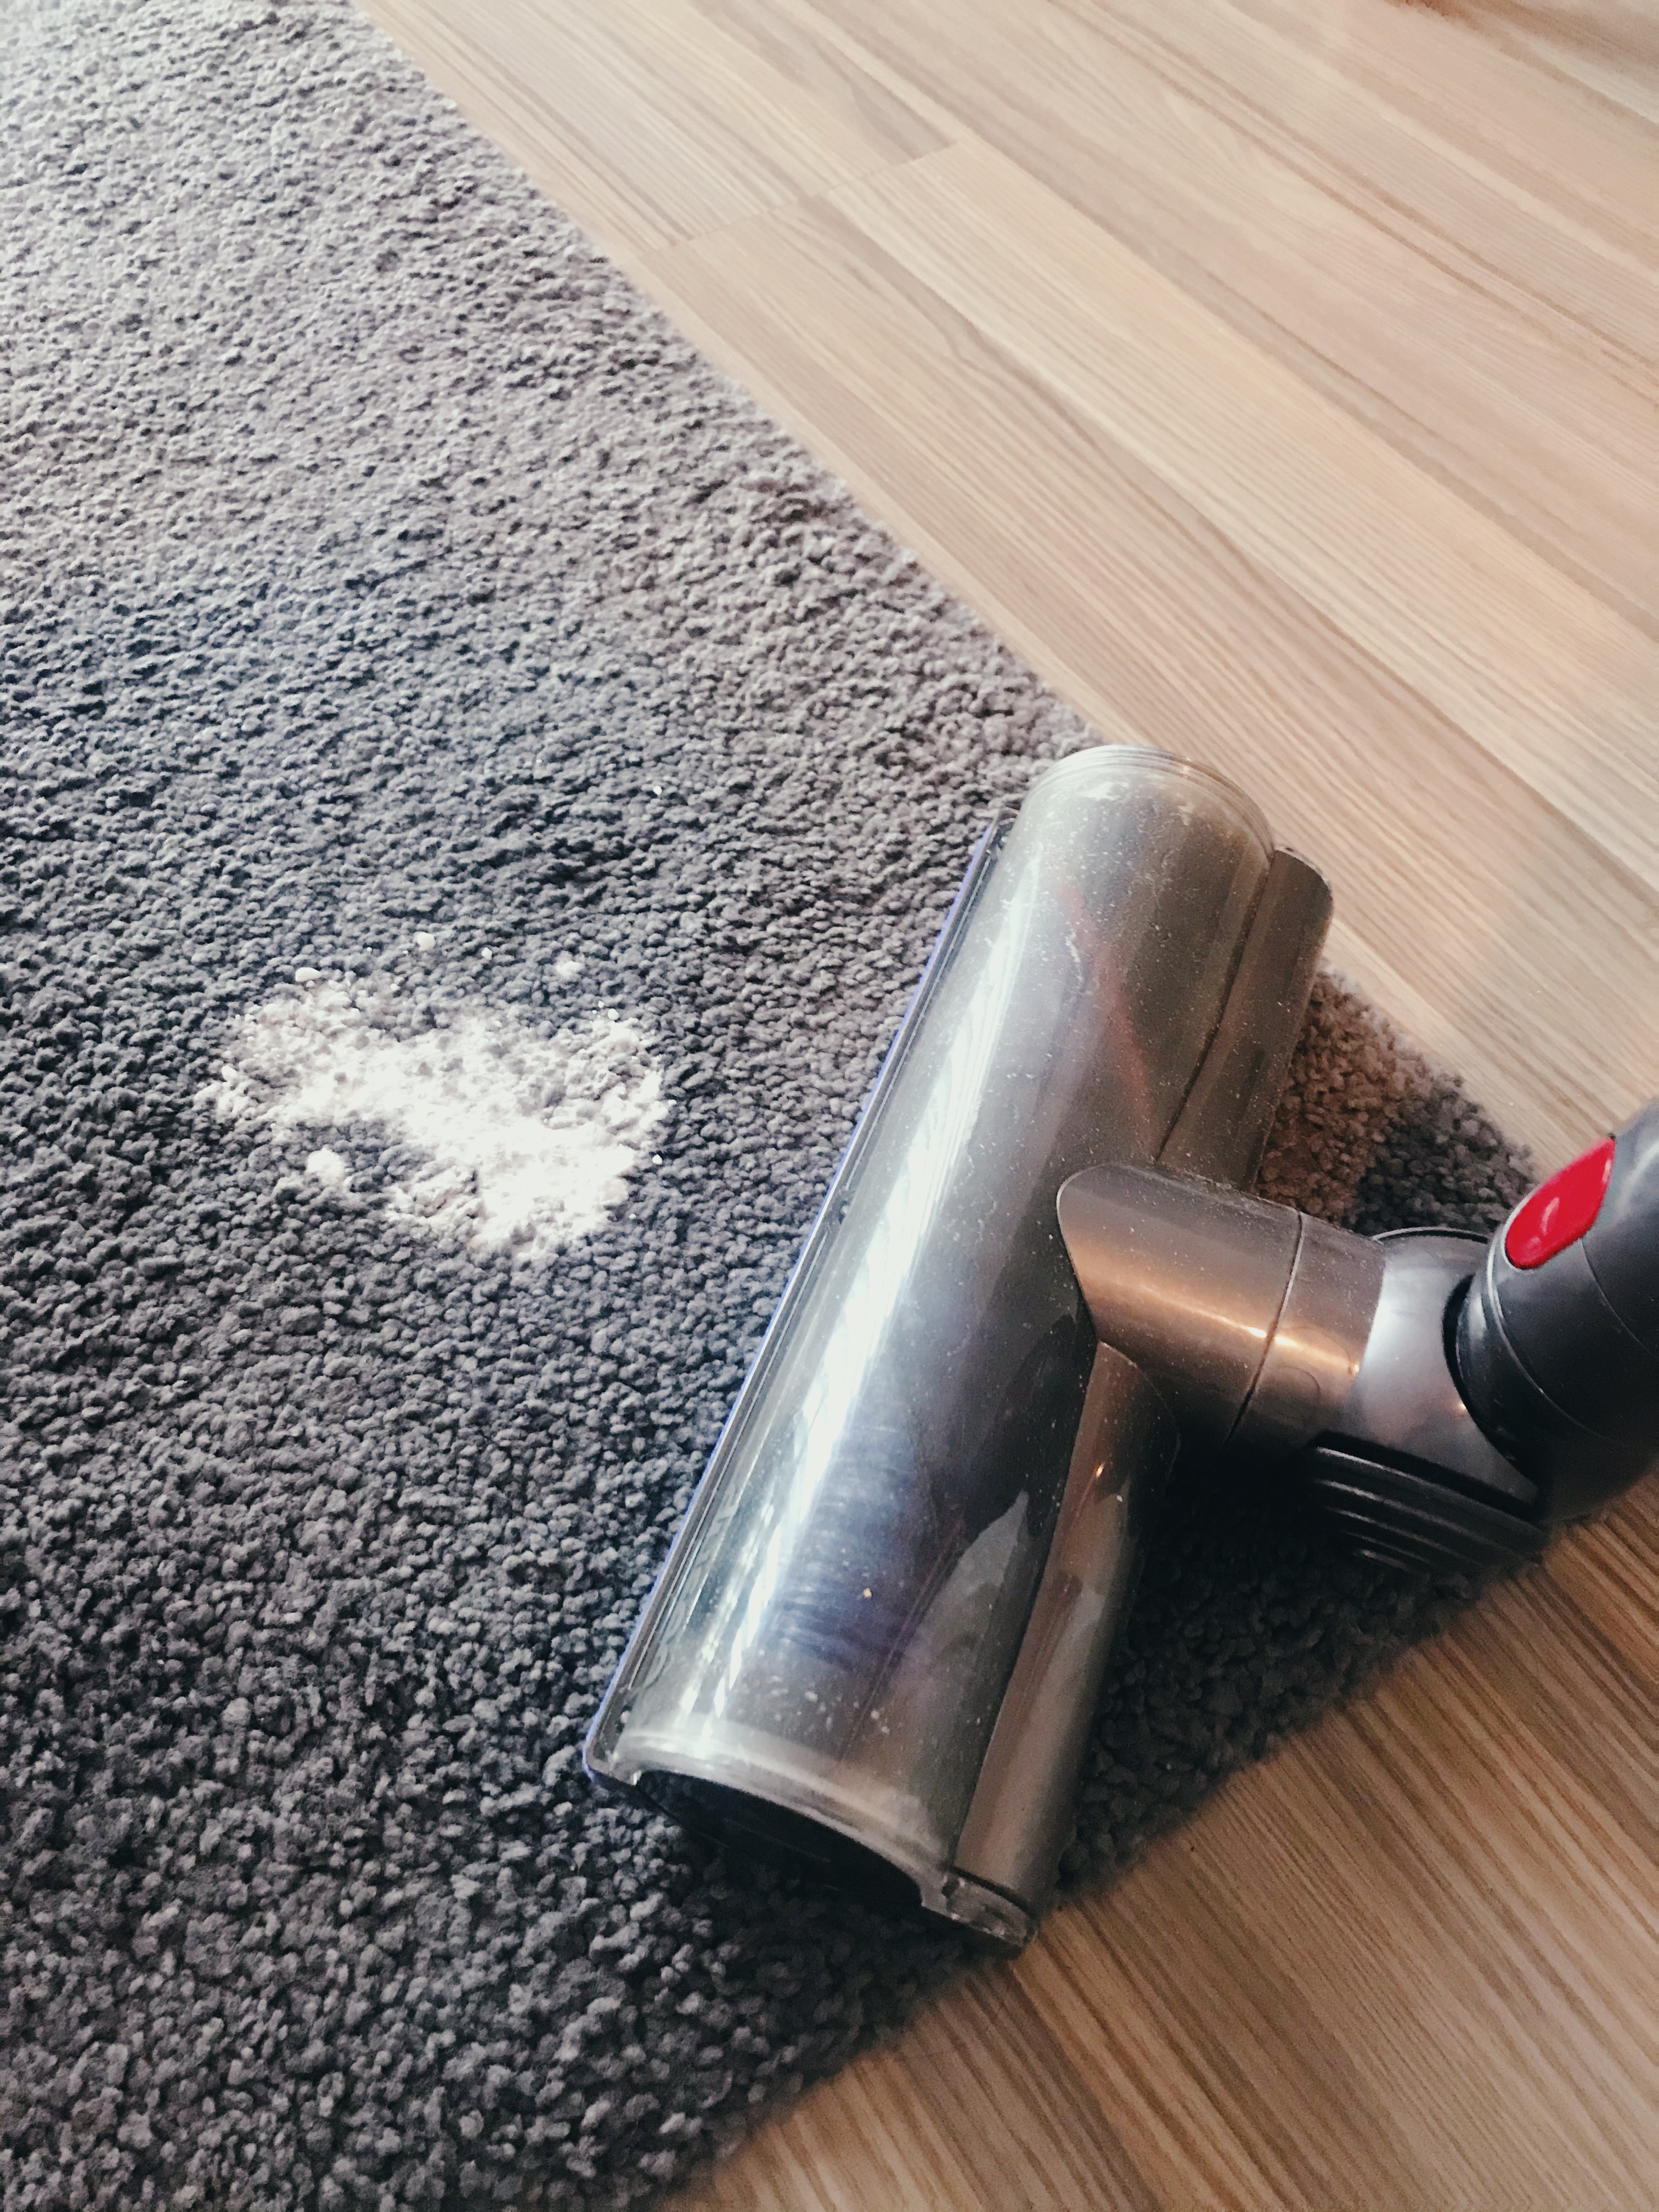 baking-sode-usage-carpet-cleaning-小苏达的妙用-清洁地毯